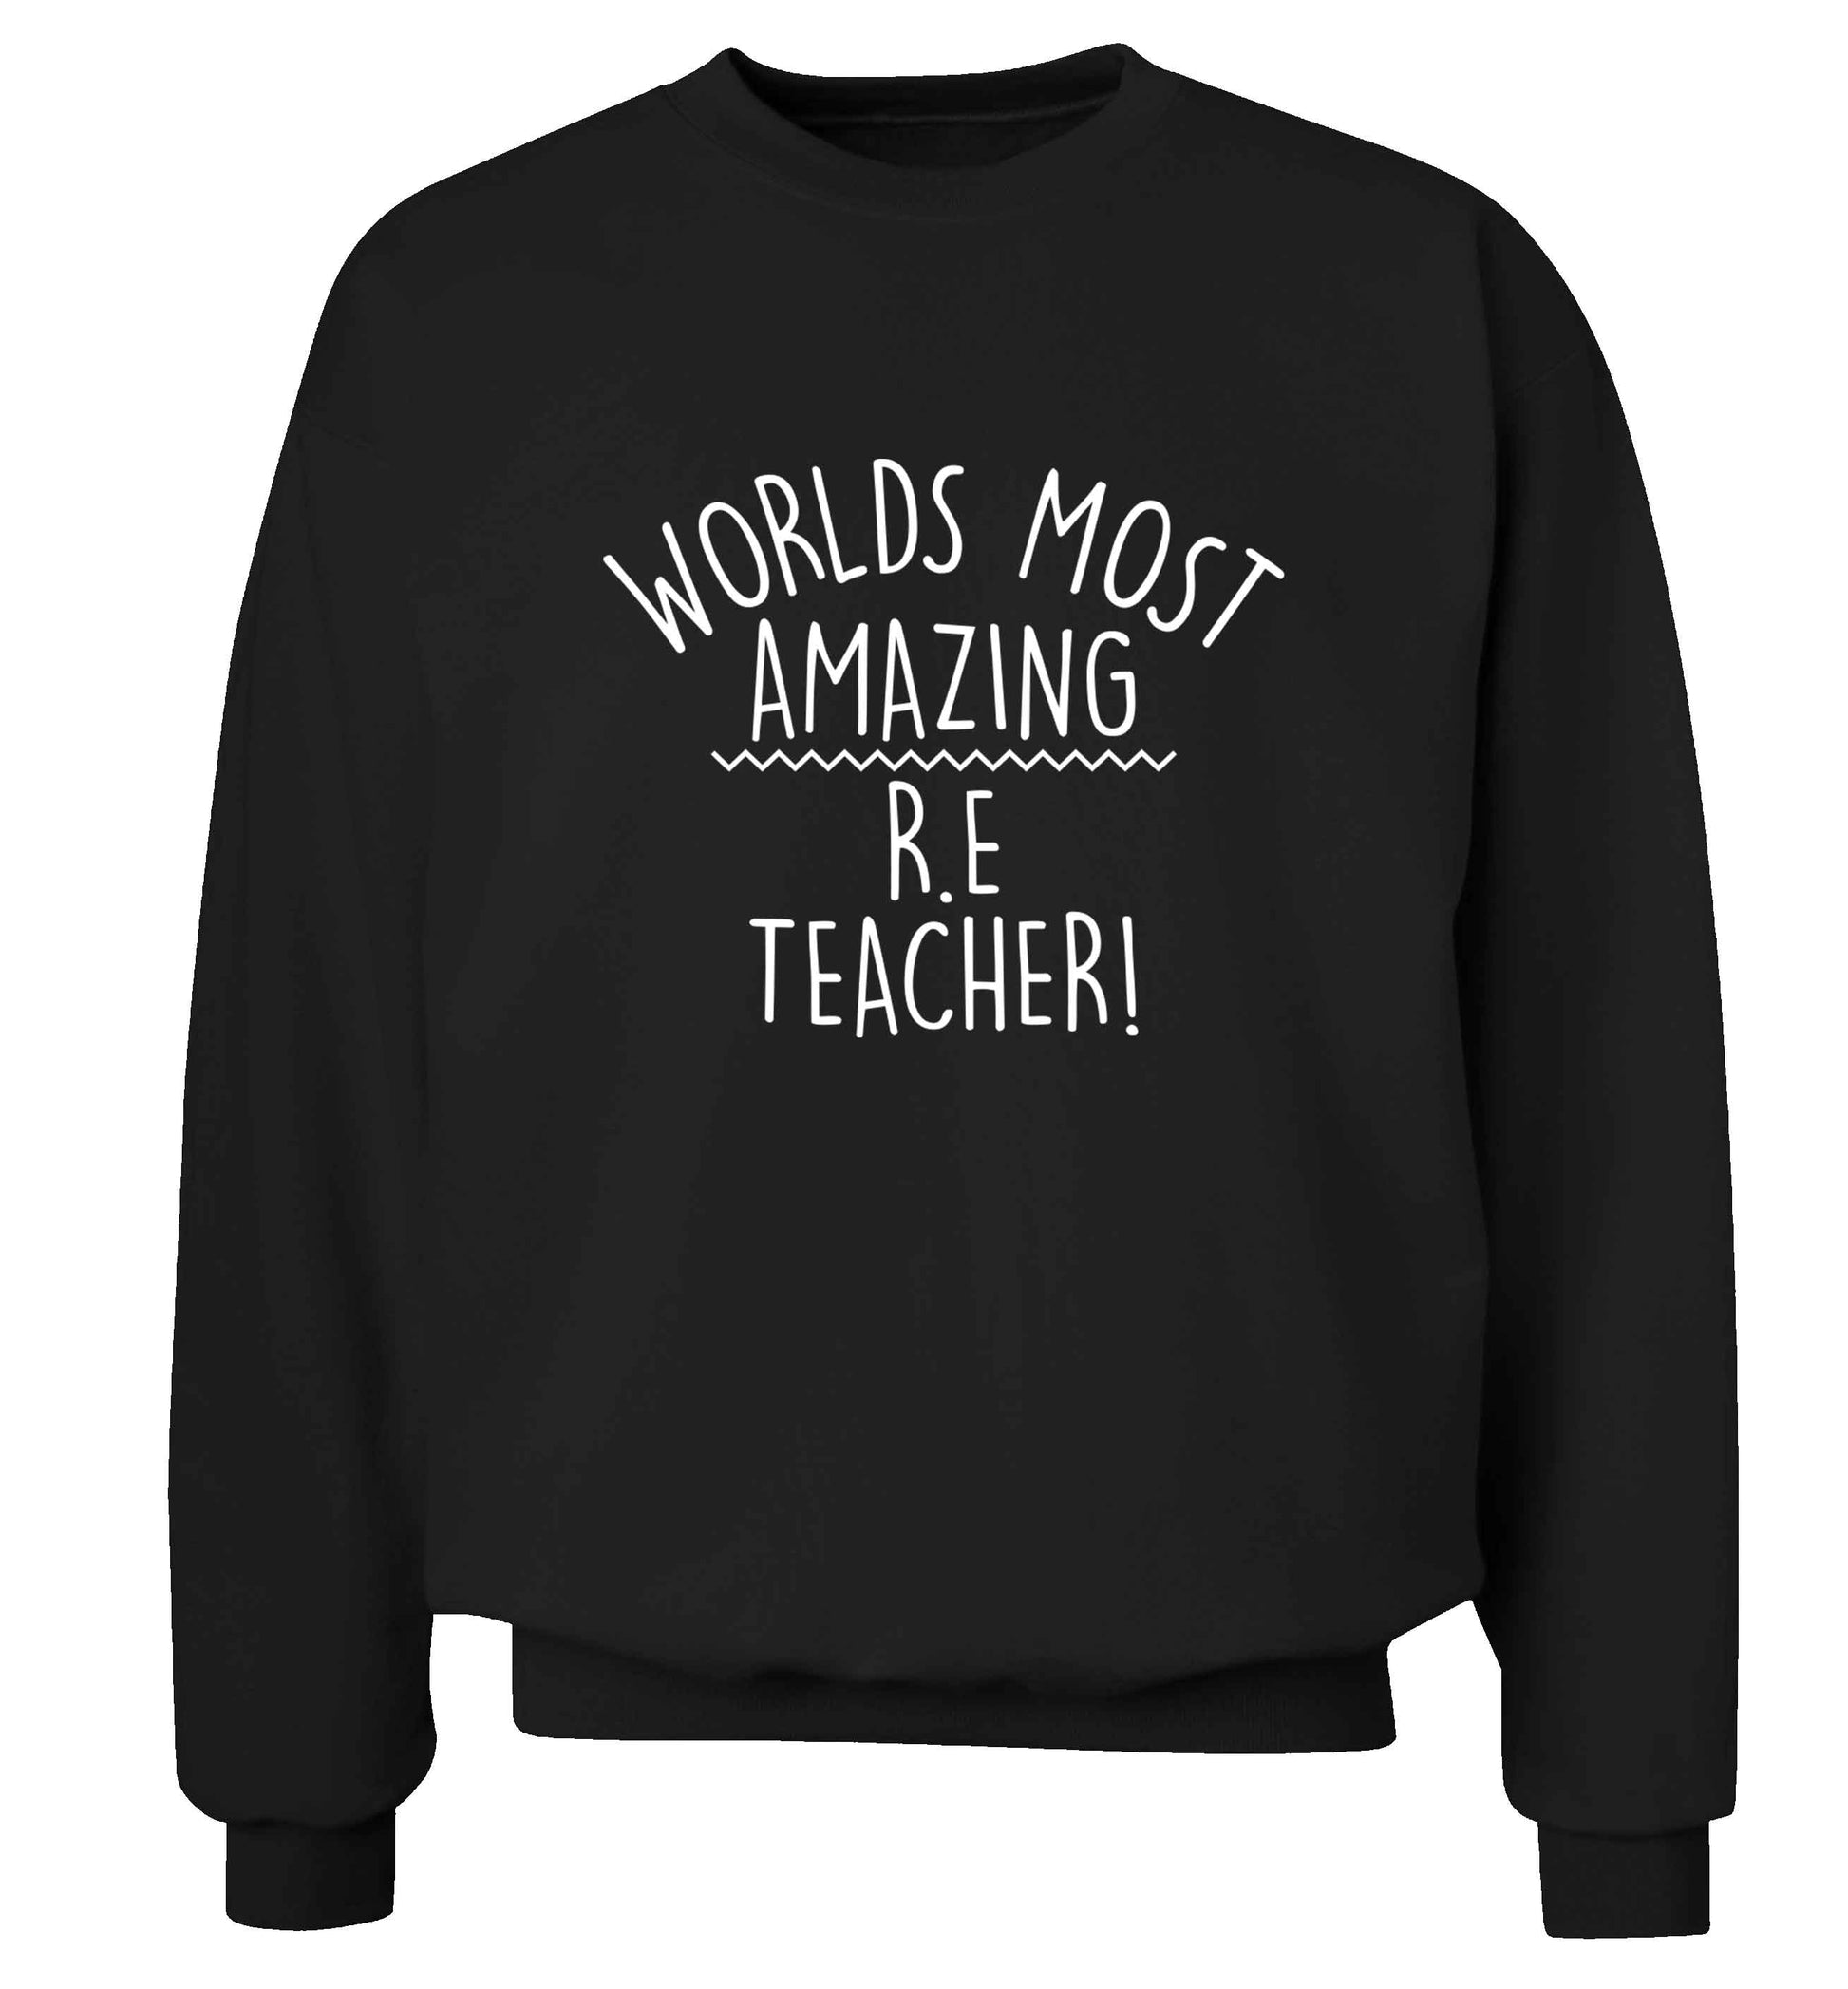 Worlds most amazing R.E teacher adult's unisex black sweater 2XL